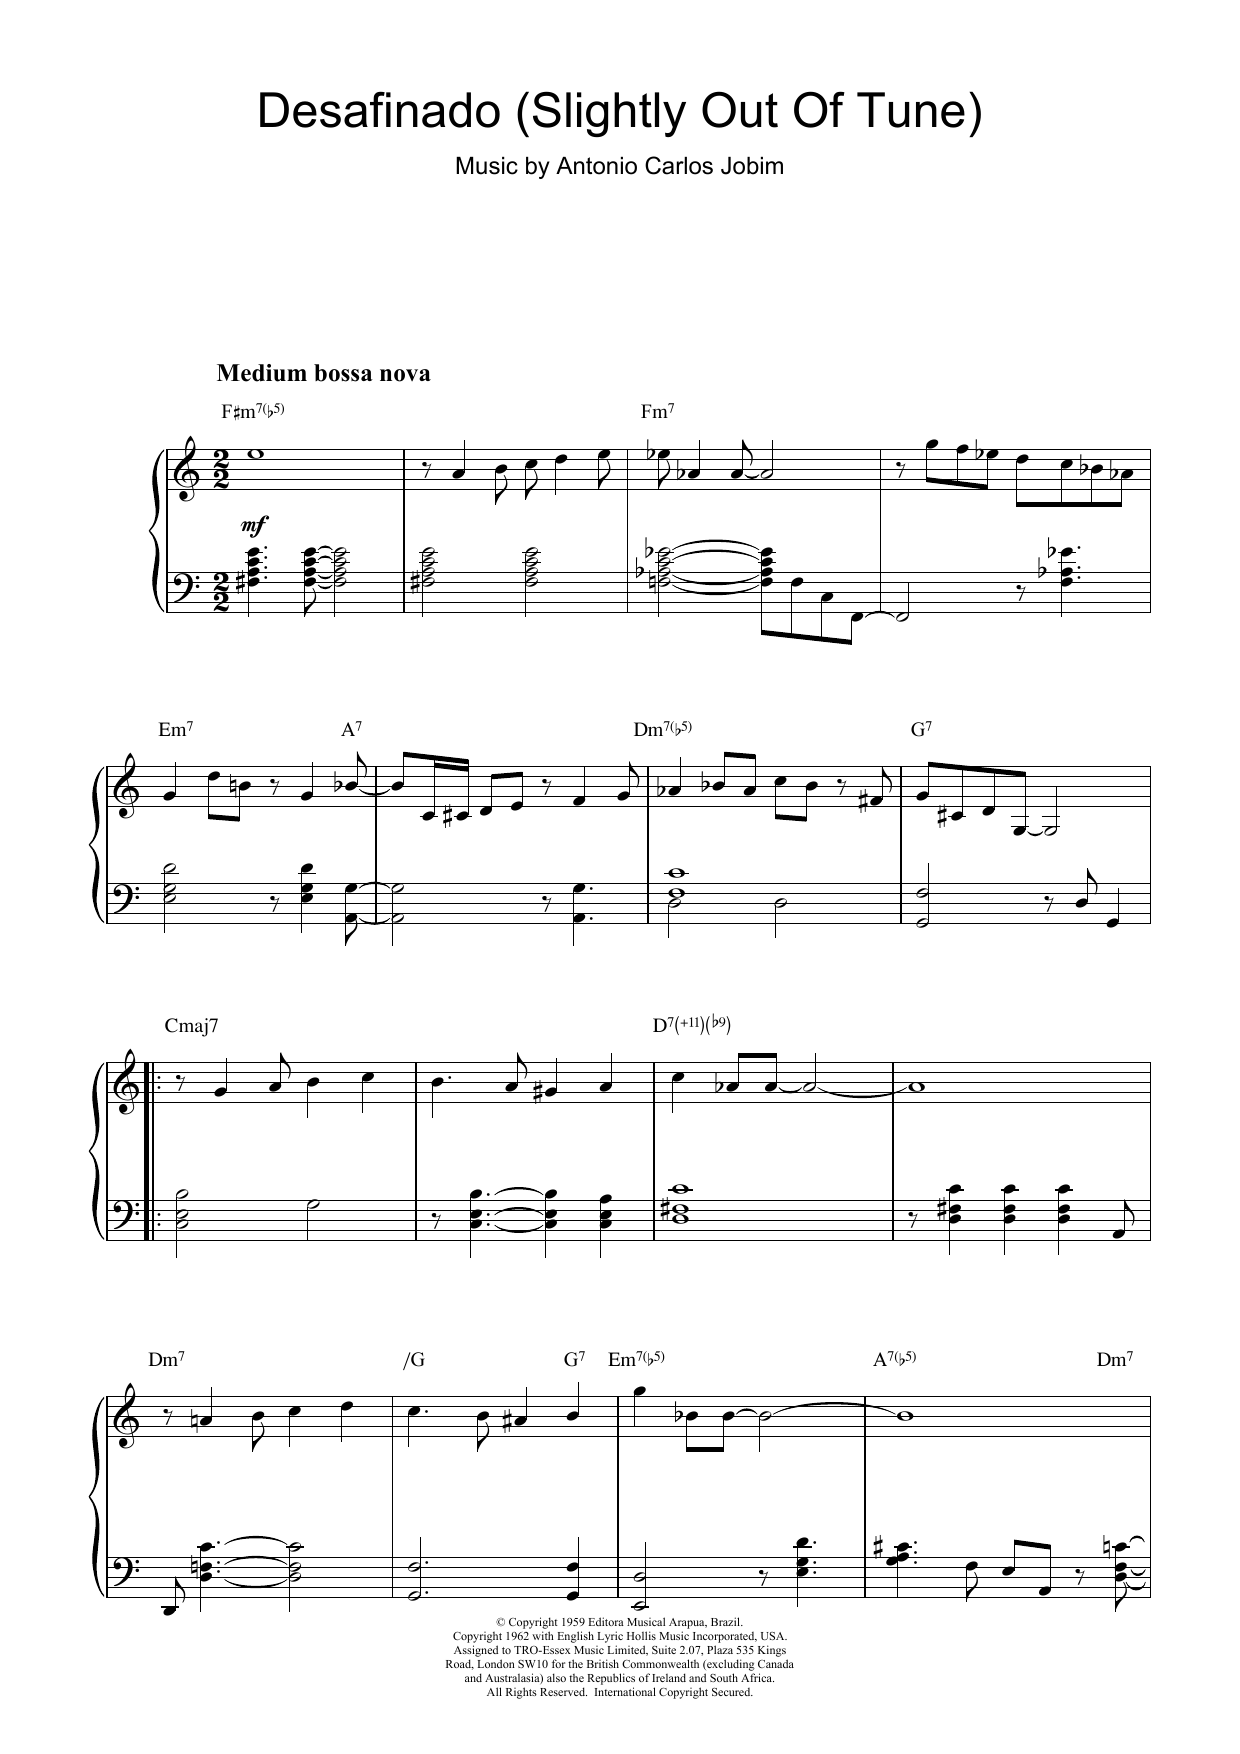 Antonio Carlos Jobim Desafinado (Slightly Out Of Tune) Sheet Music Notes & Chords for Alto Saxophone - Download or Print PDF